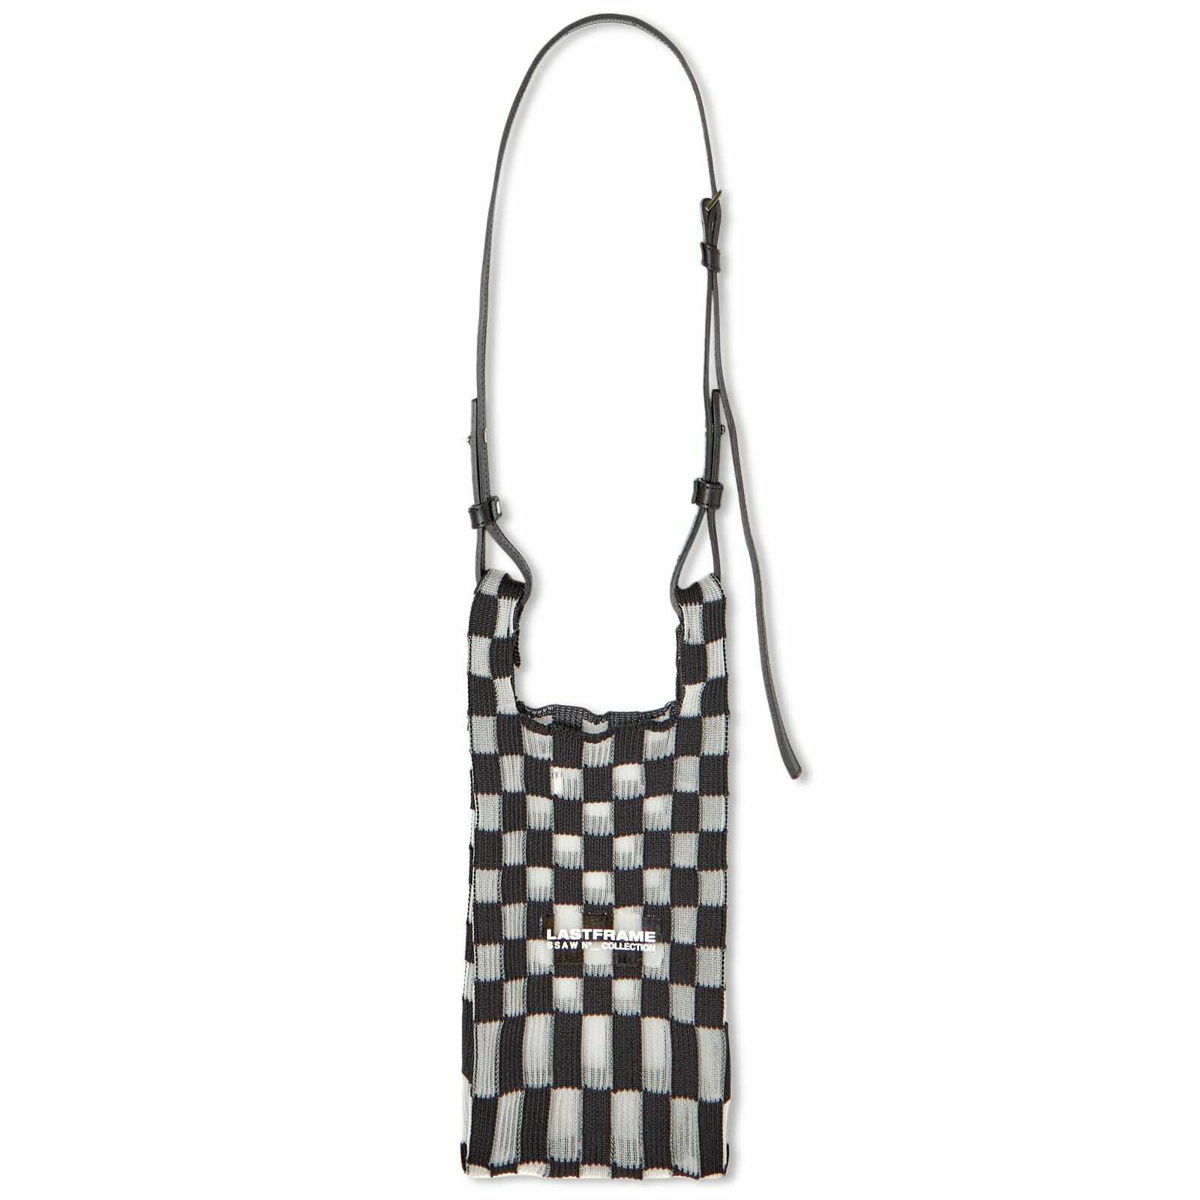 LASTFRAME Women's Sheer Ichimatsu Market Bag Mini in Black/Clear